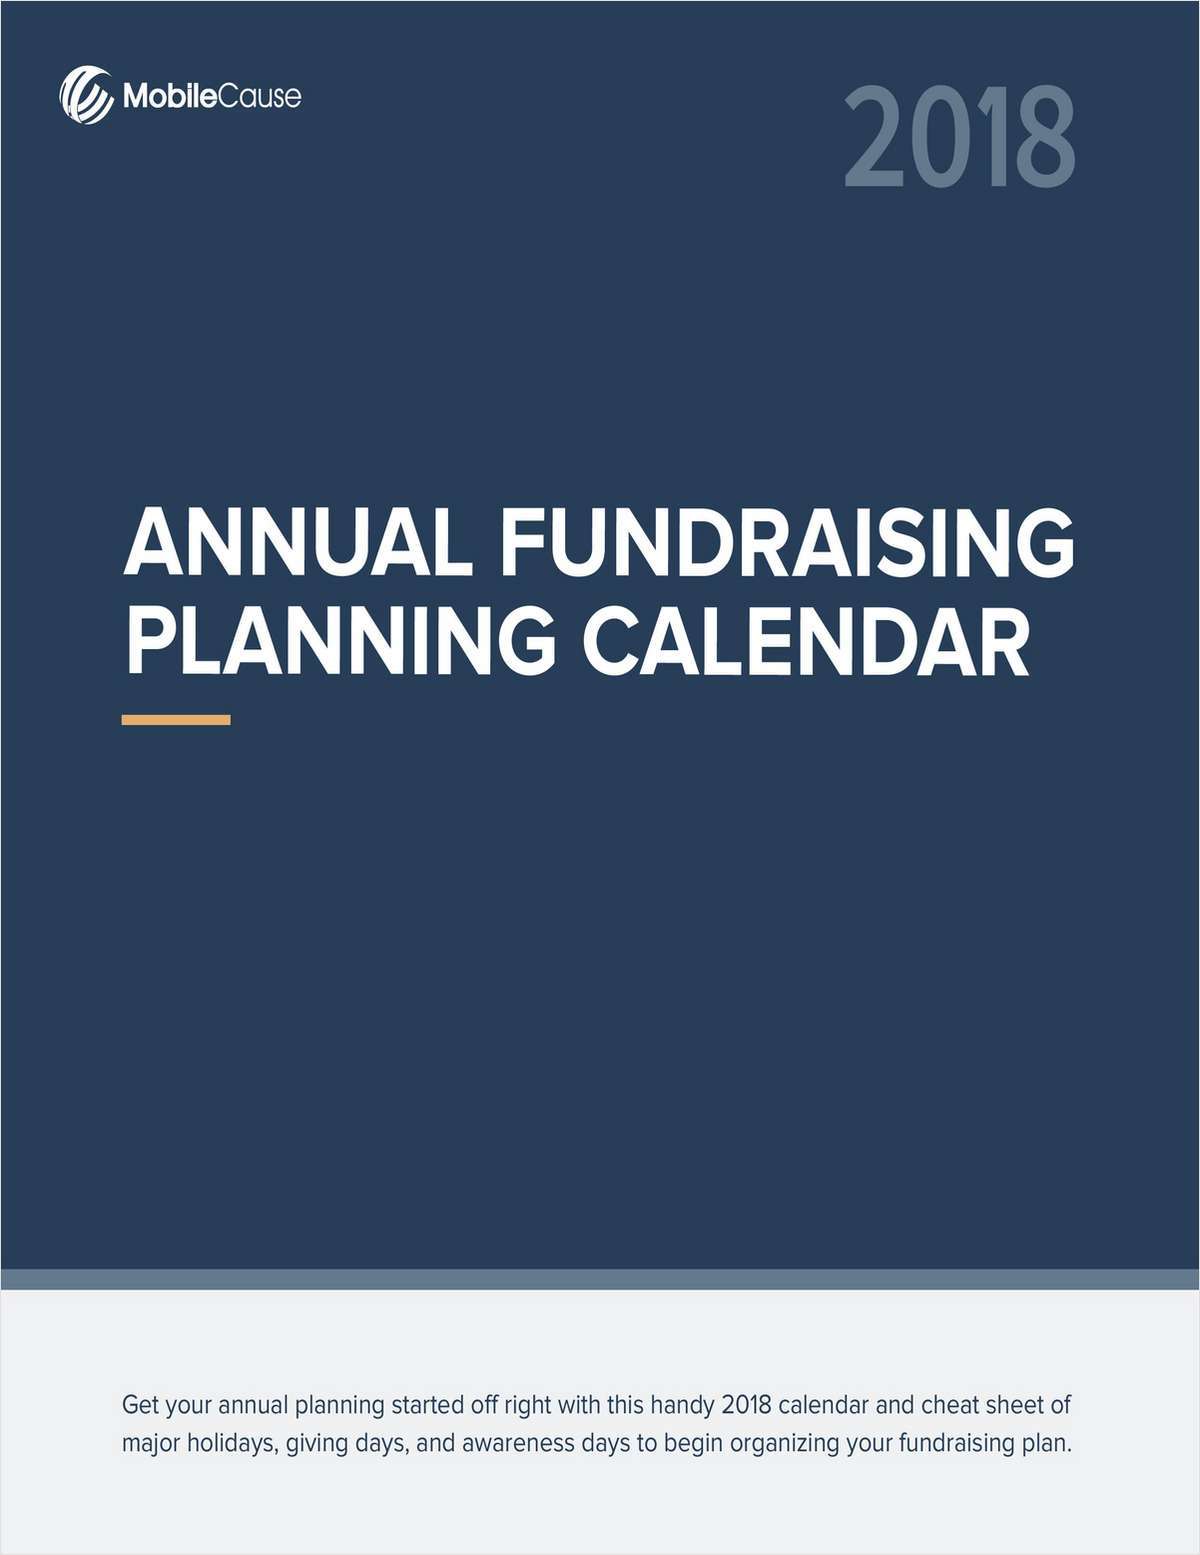 Annual Fundraising Planning Calendar Infographic